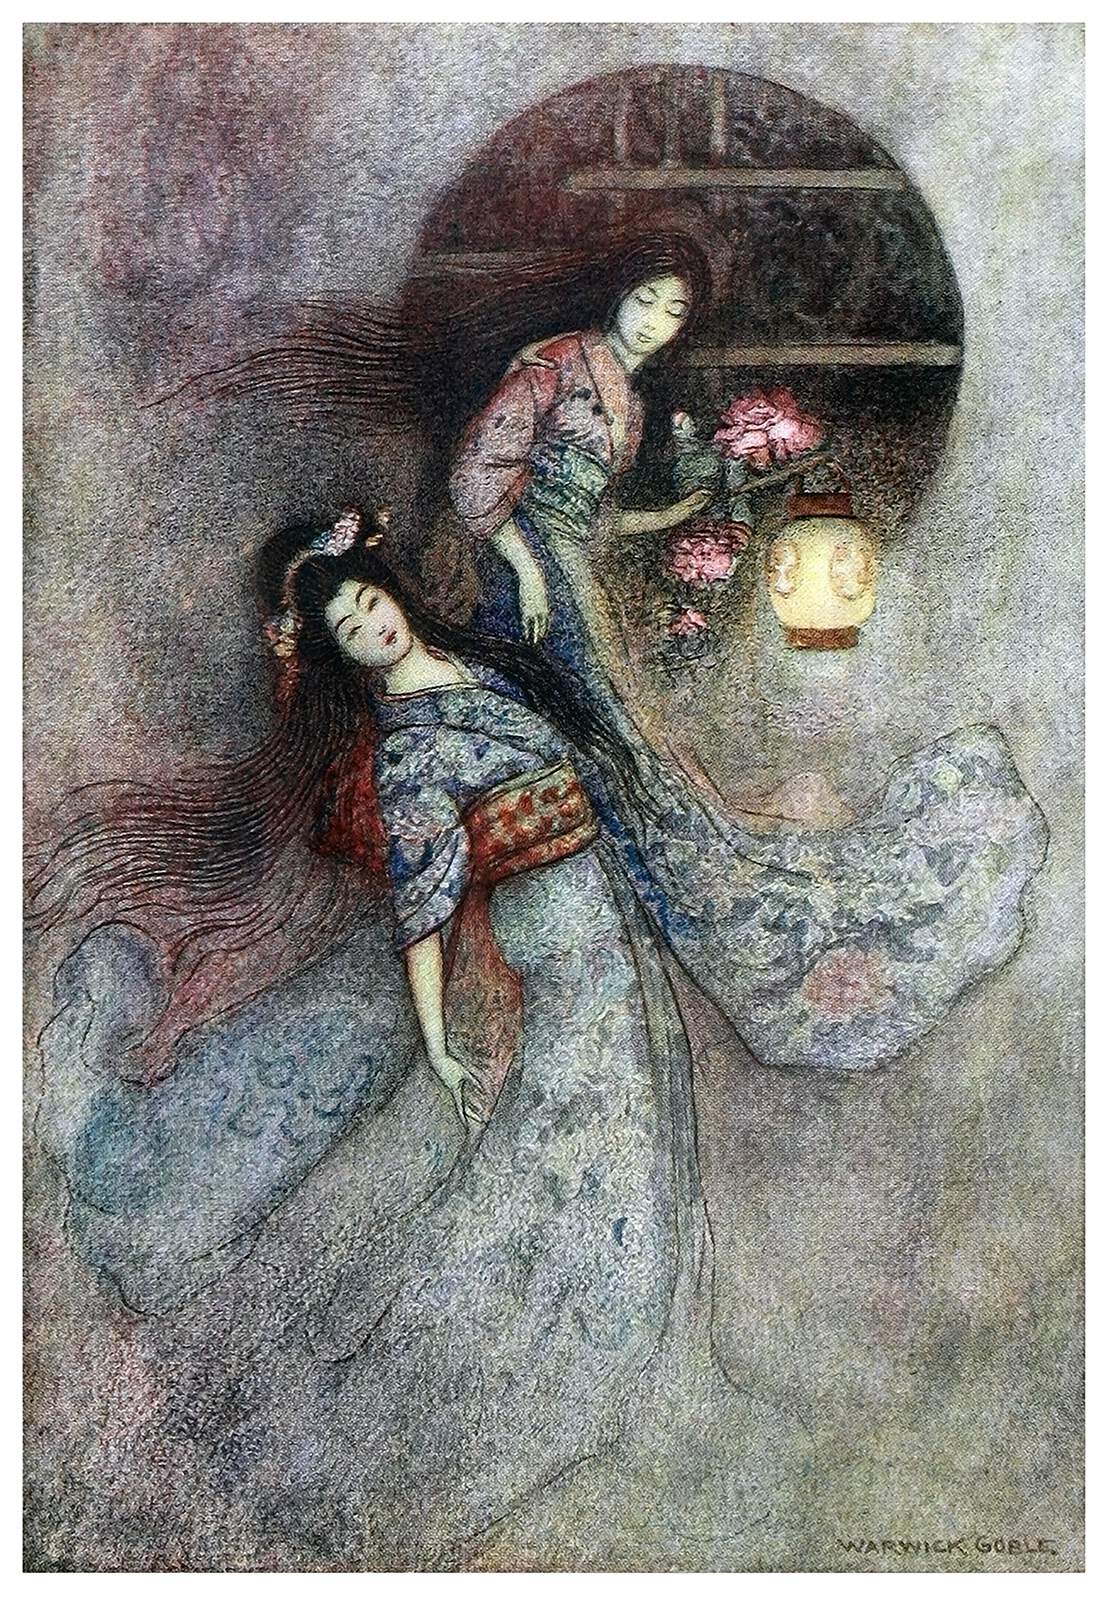 The Peony Lantern – Old Book Illustrations